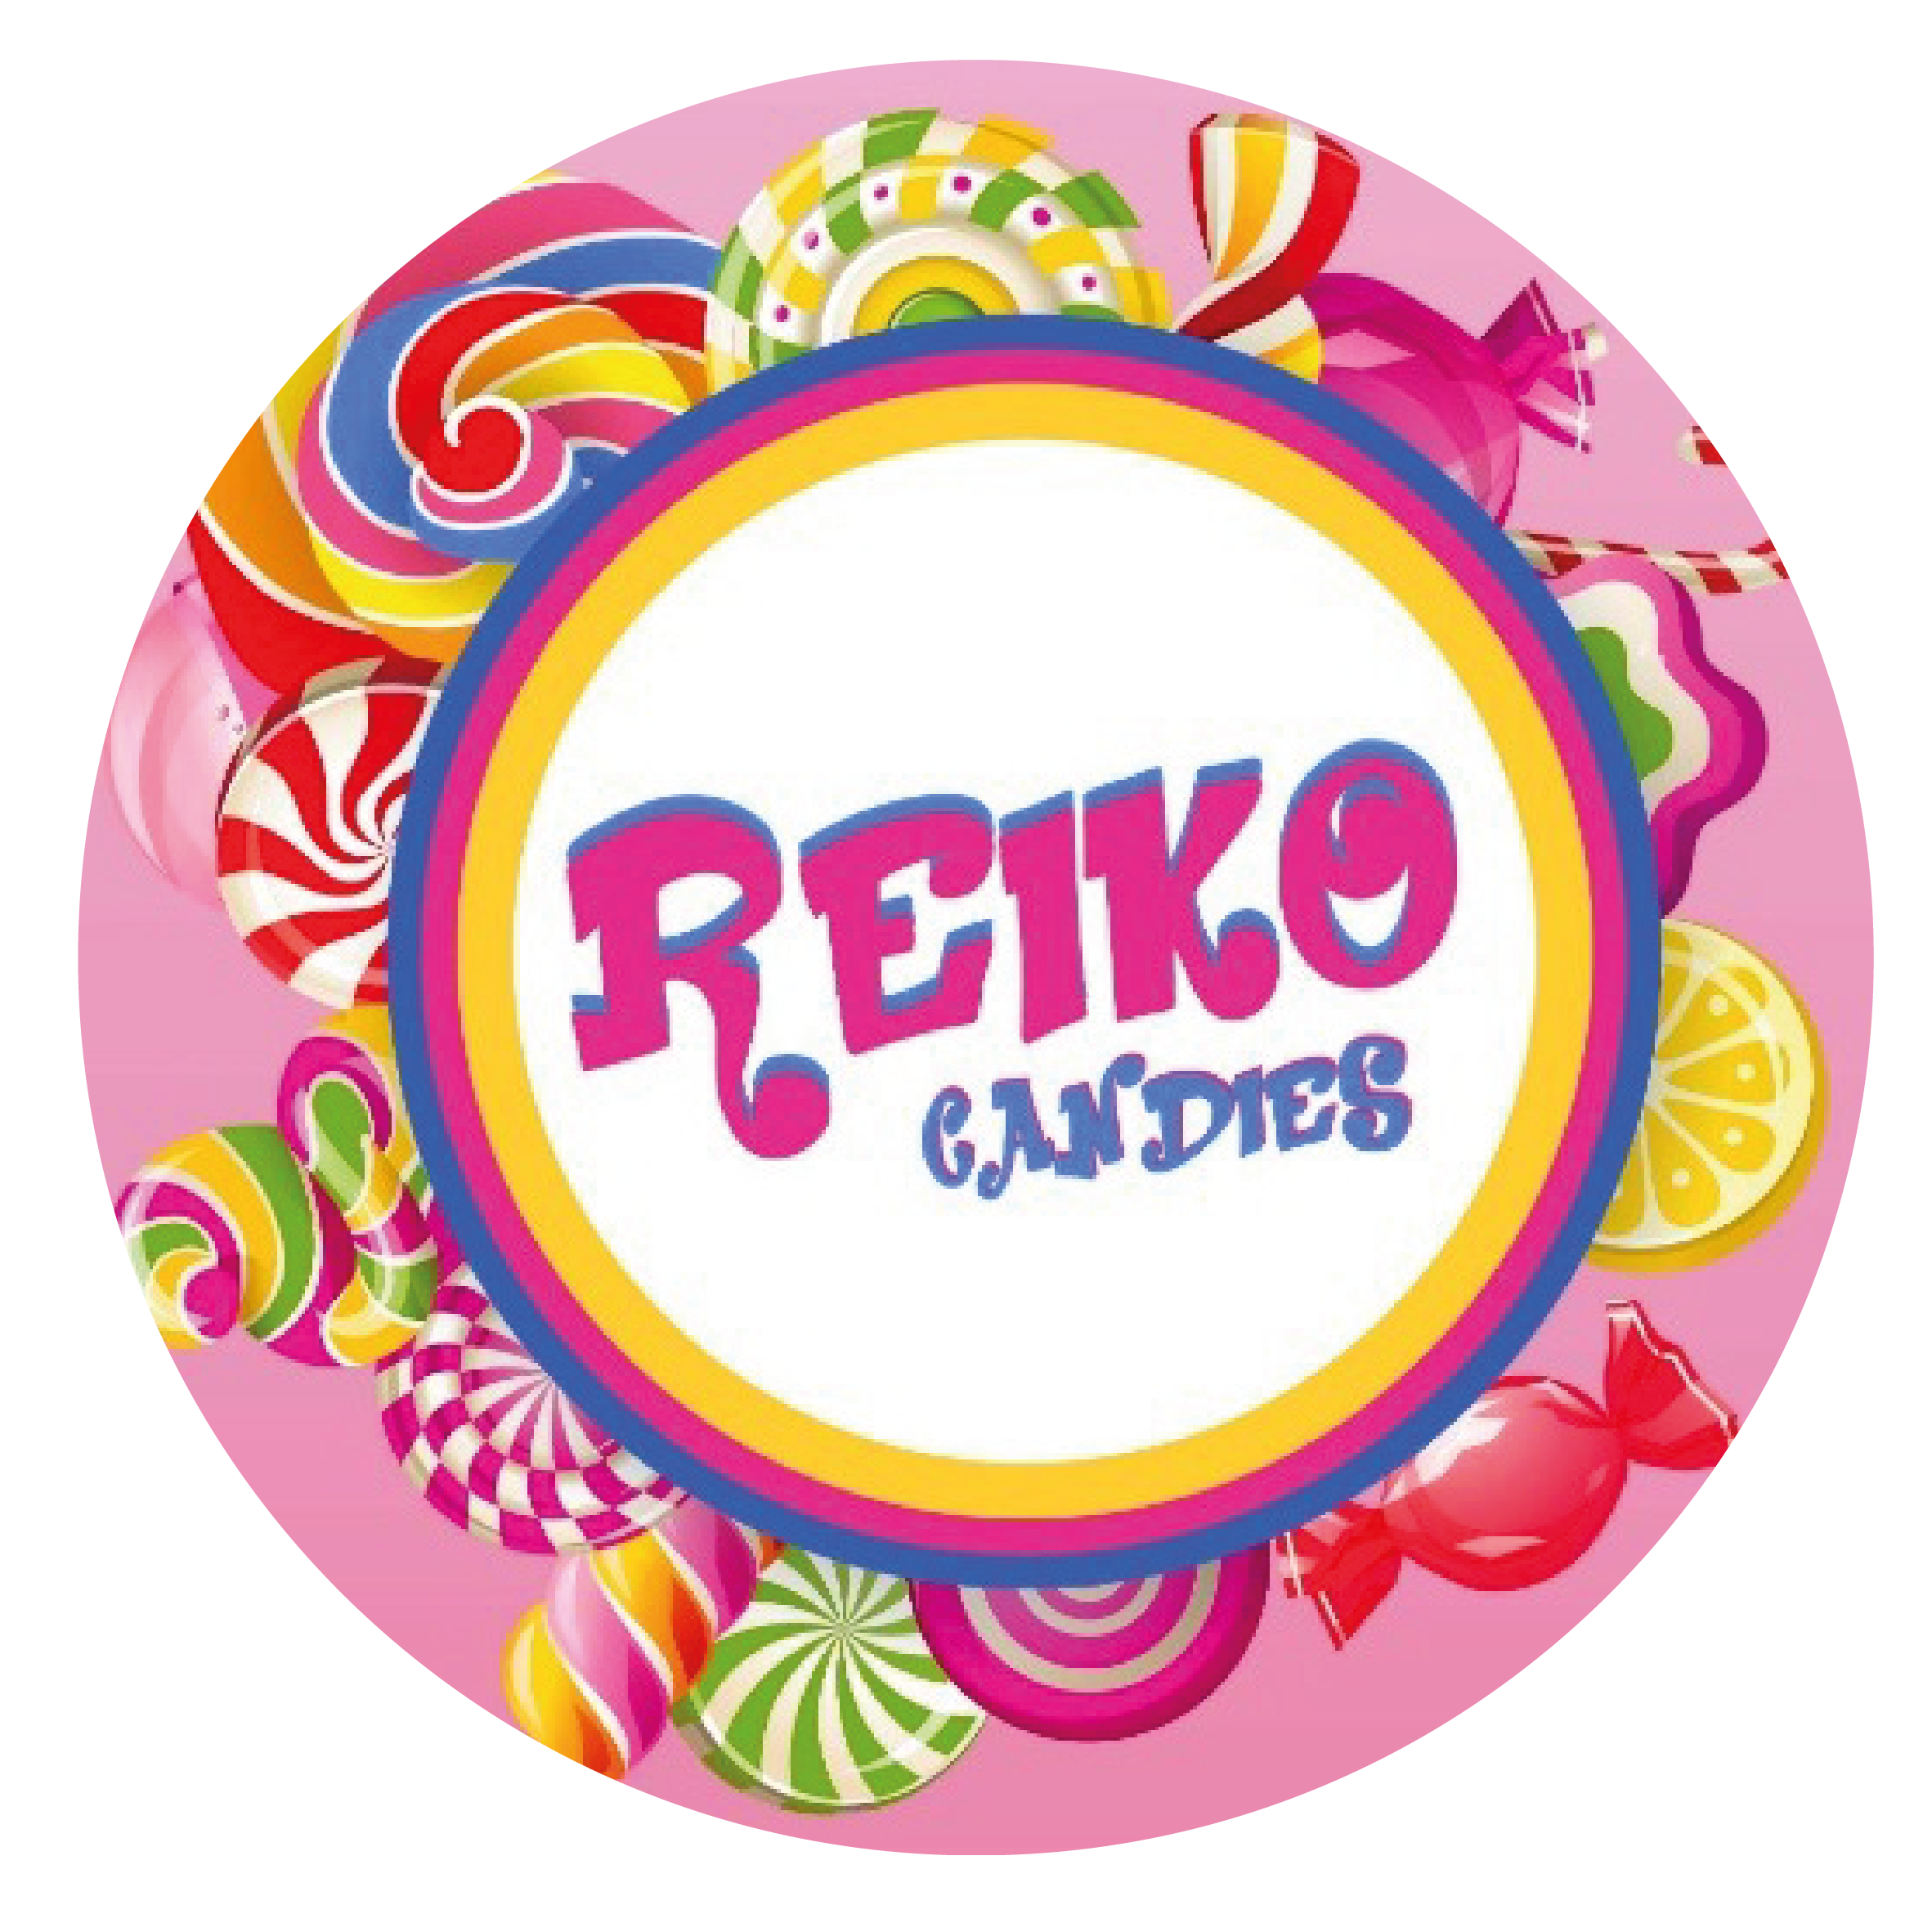 REIKO CANDIES